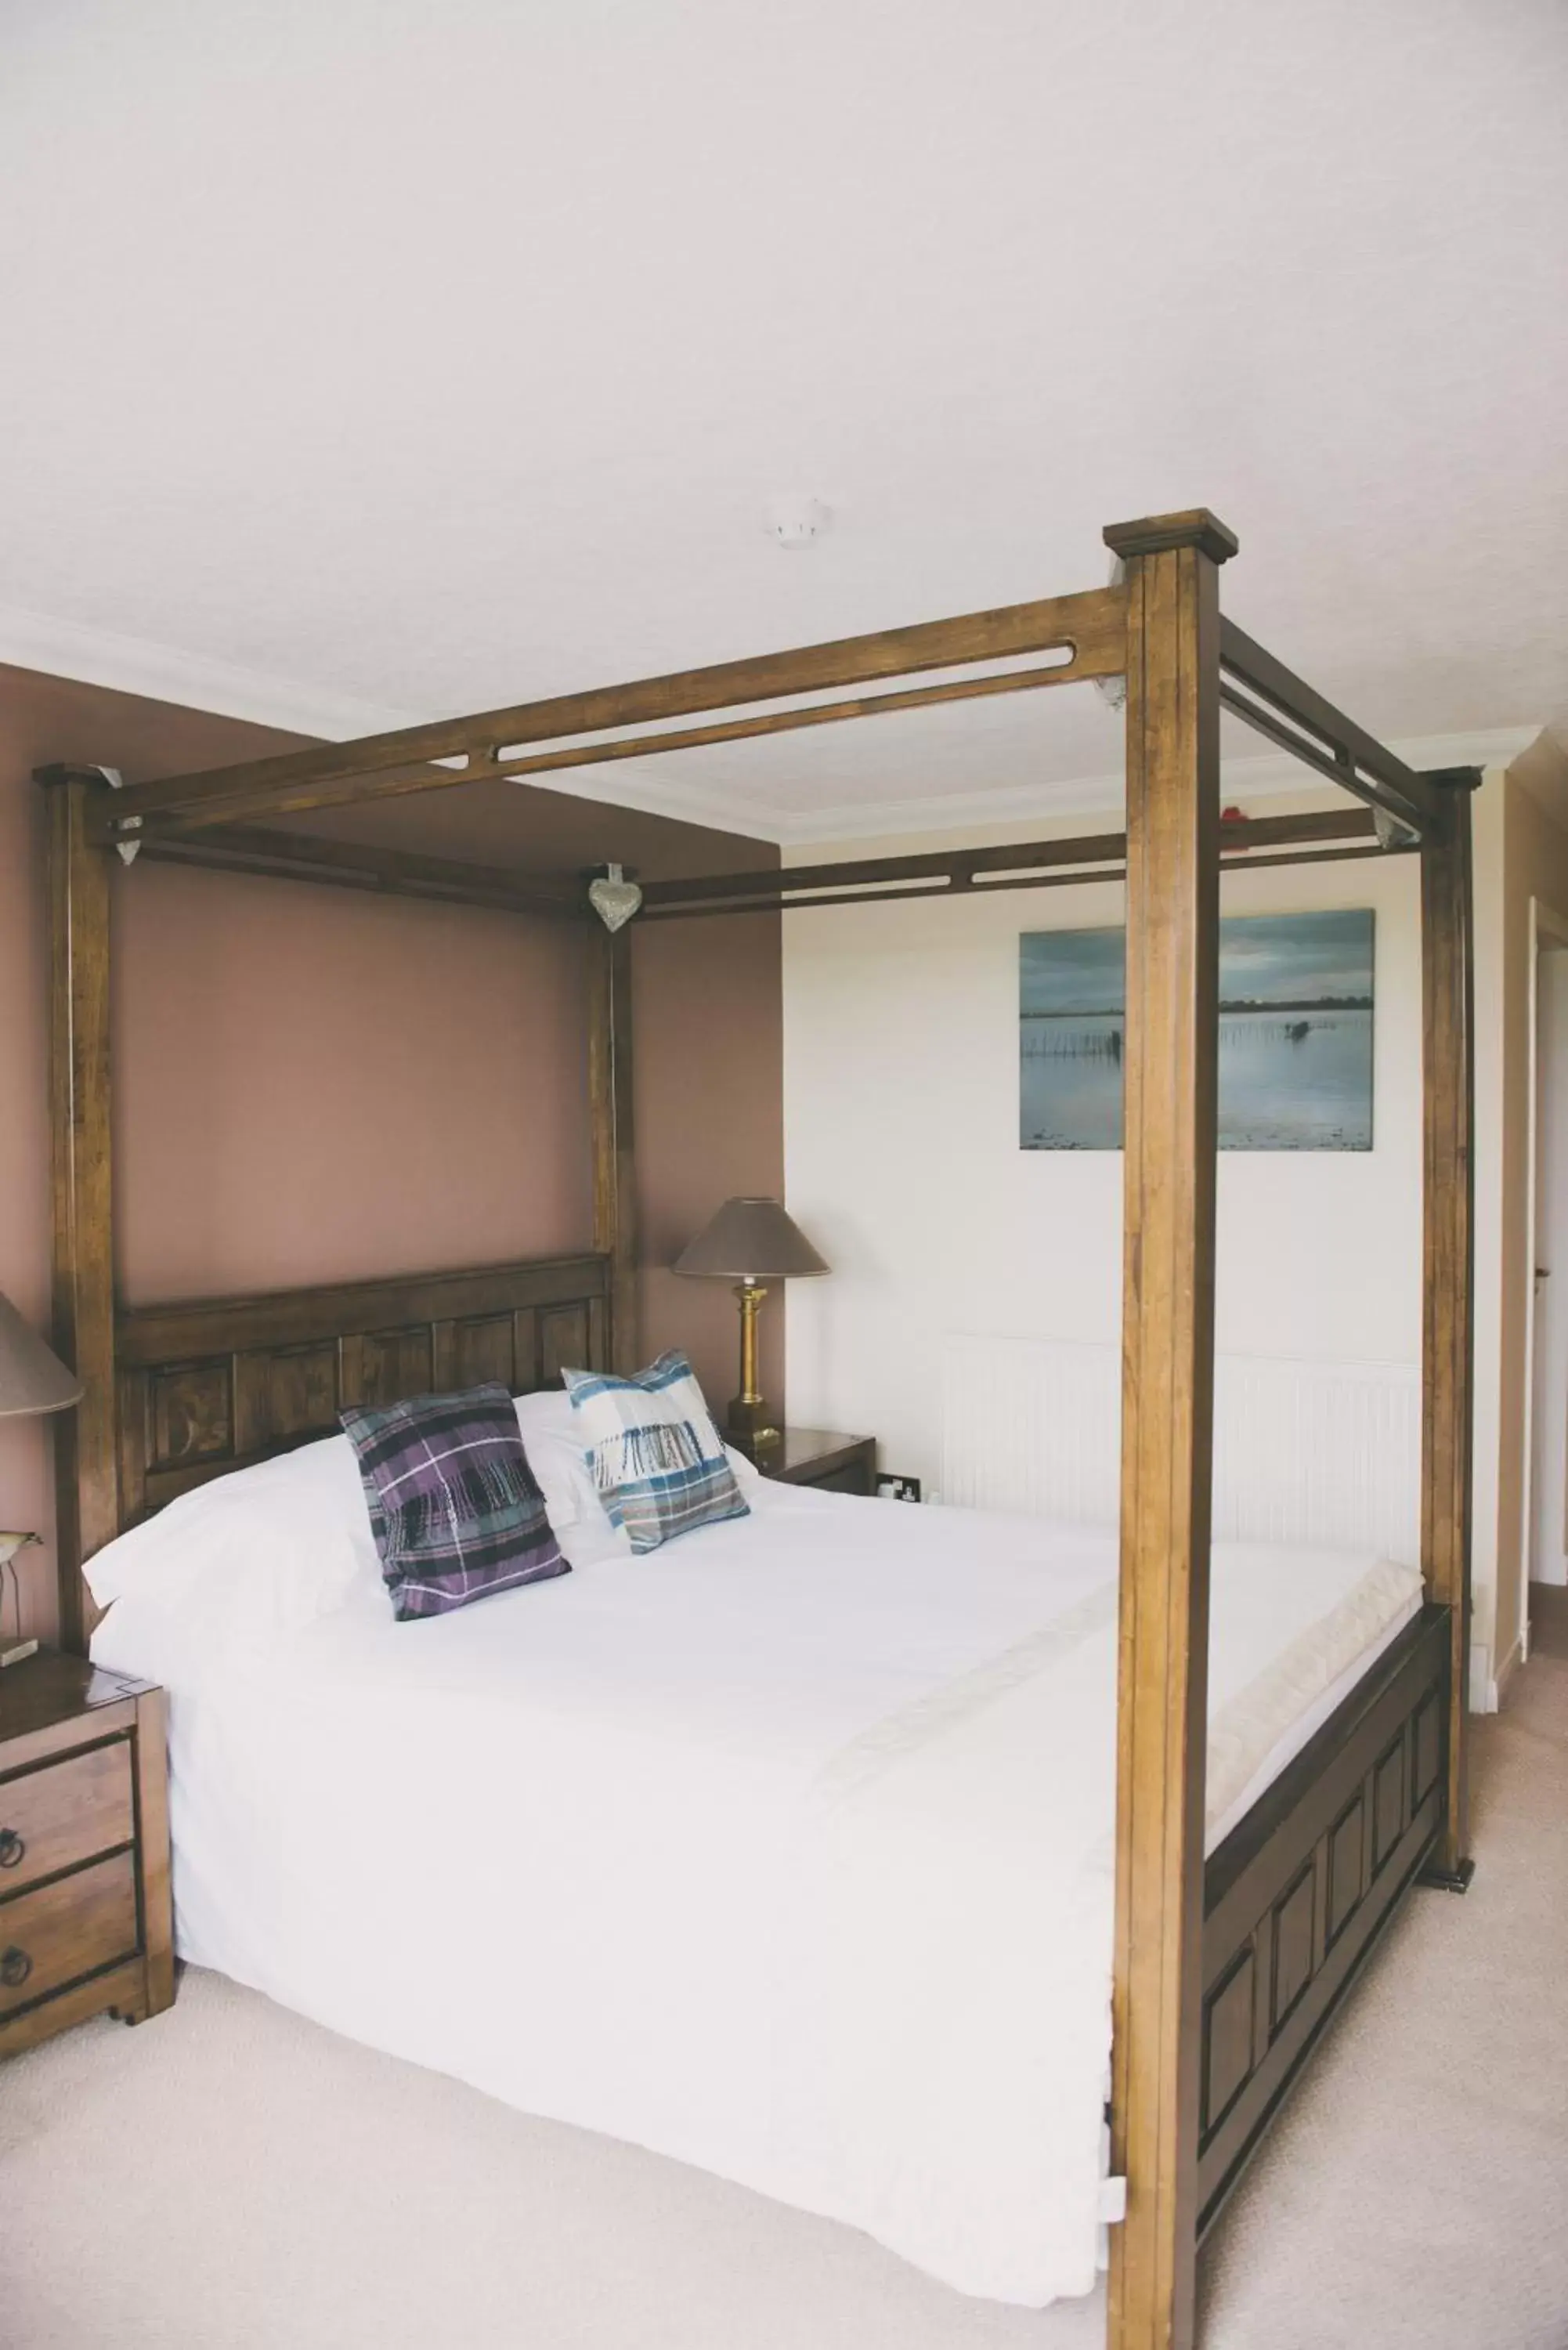 Bedroom in The Powfoot Hotel, Annan